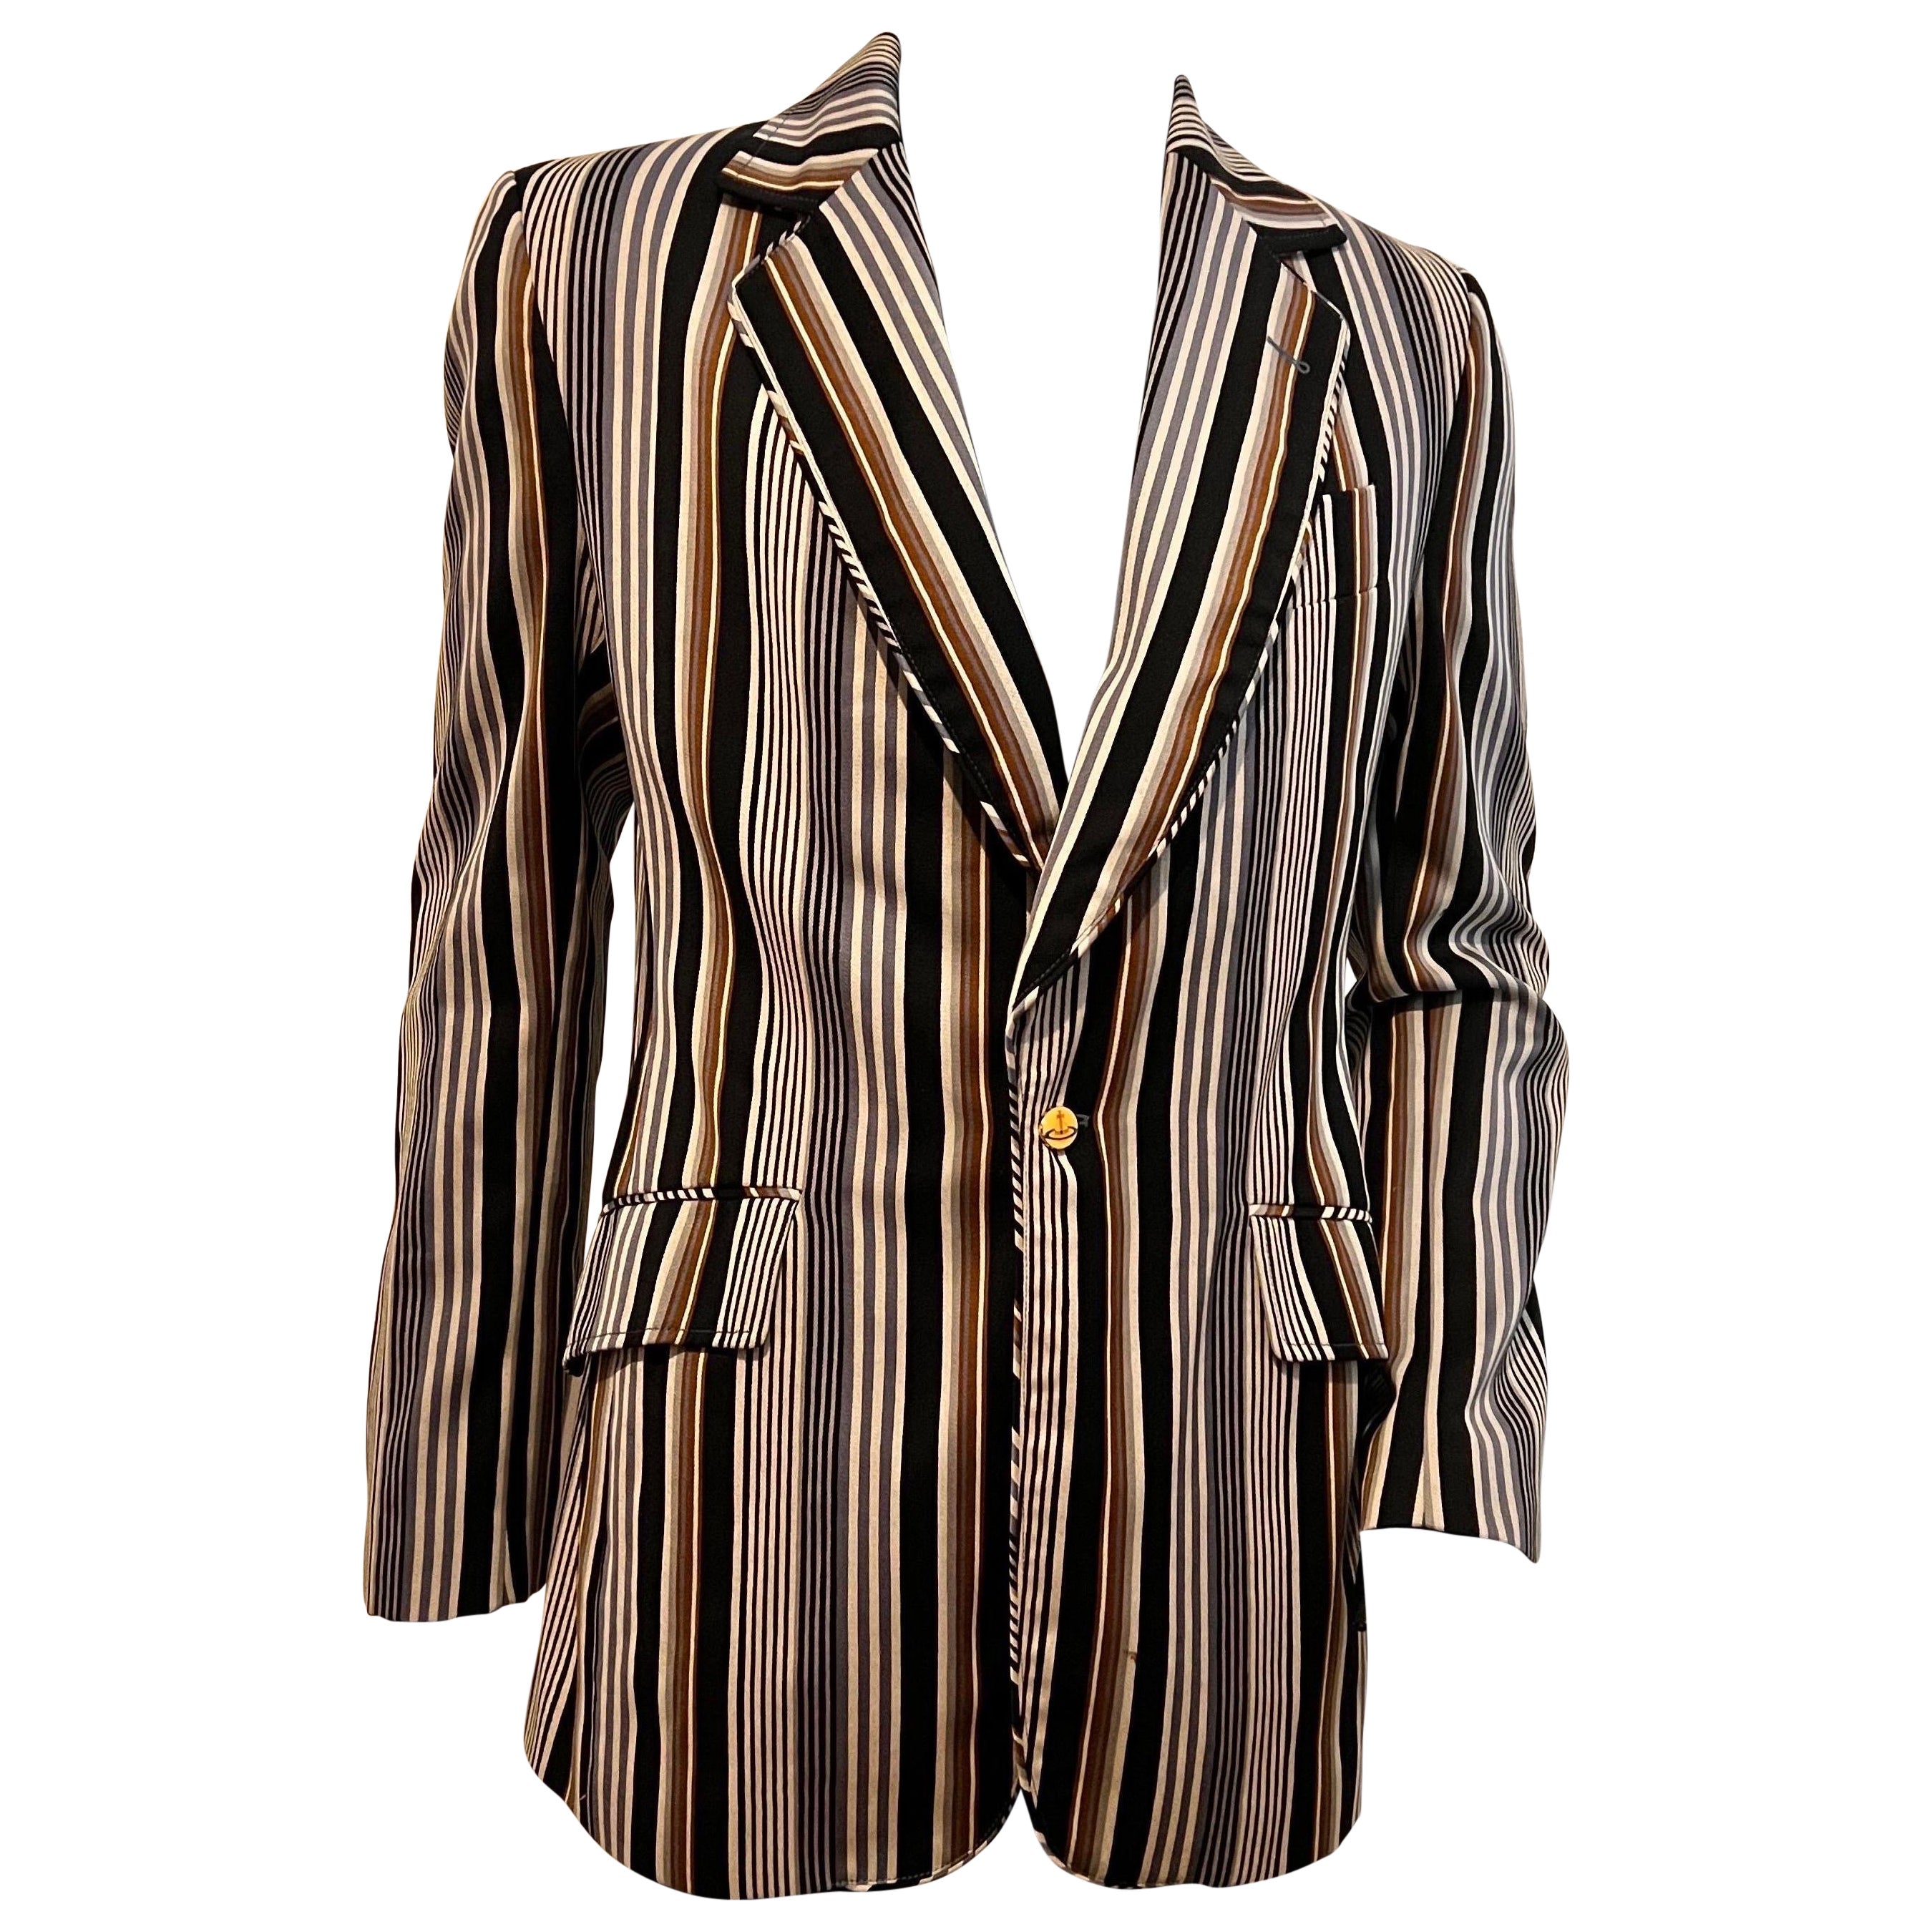 Vintage 1990’s Vivienne Westwood MAN multi stripe jacket with cuff link buttons 